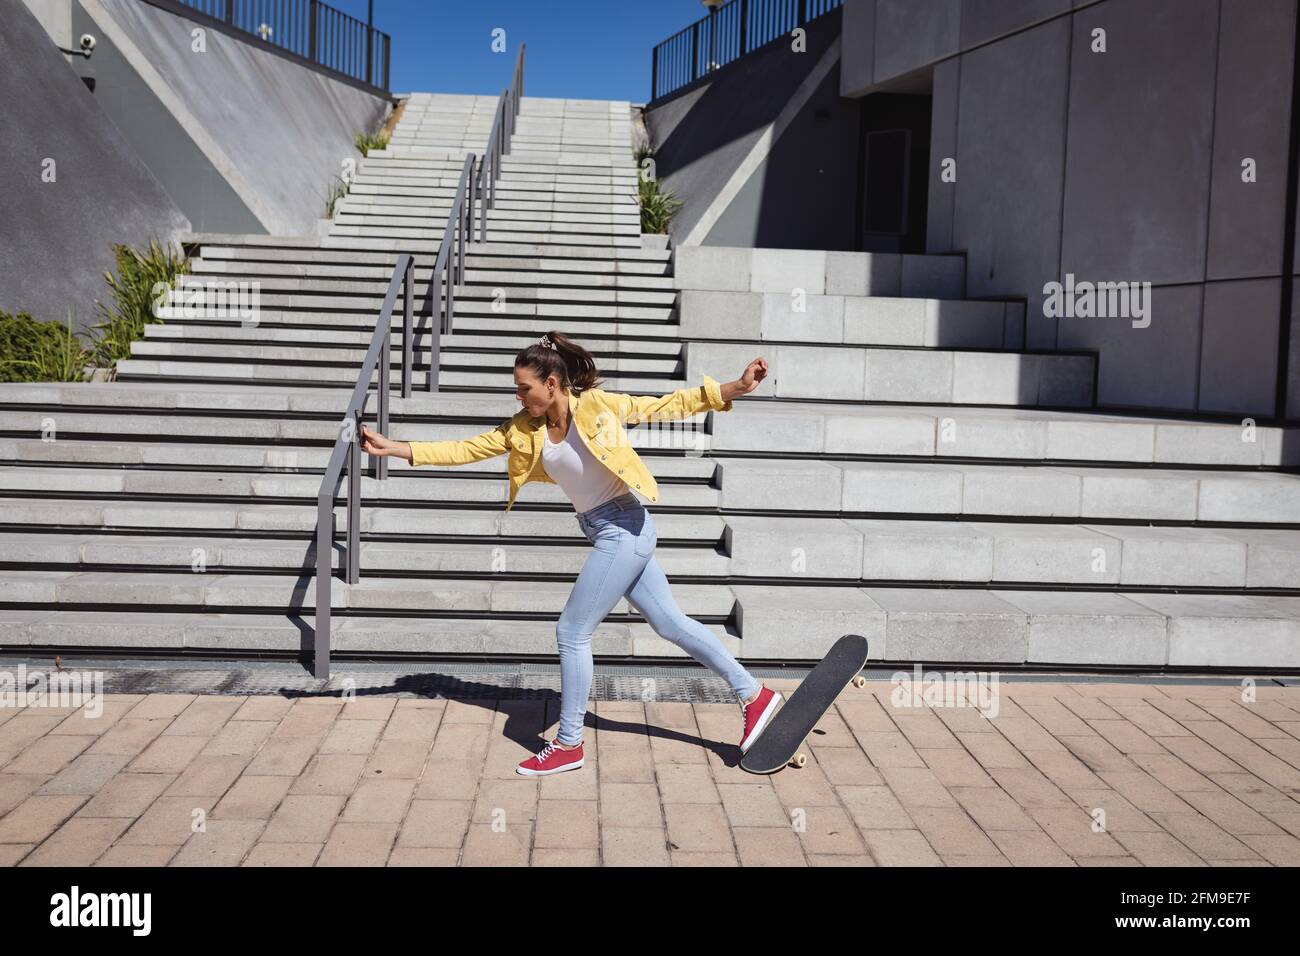 Kaukasische Frau fällt vom Skateboard neben Treppen Stockfoto